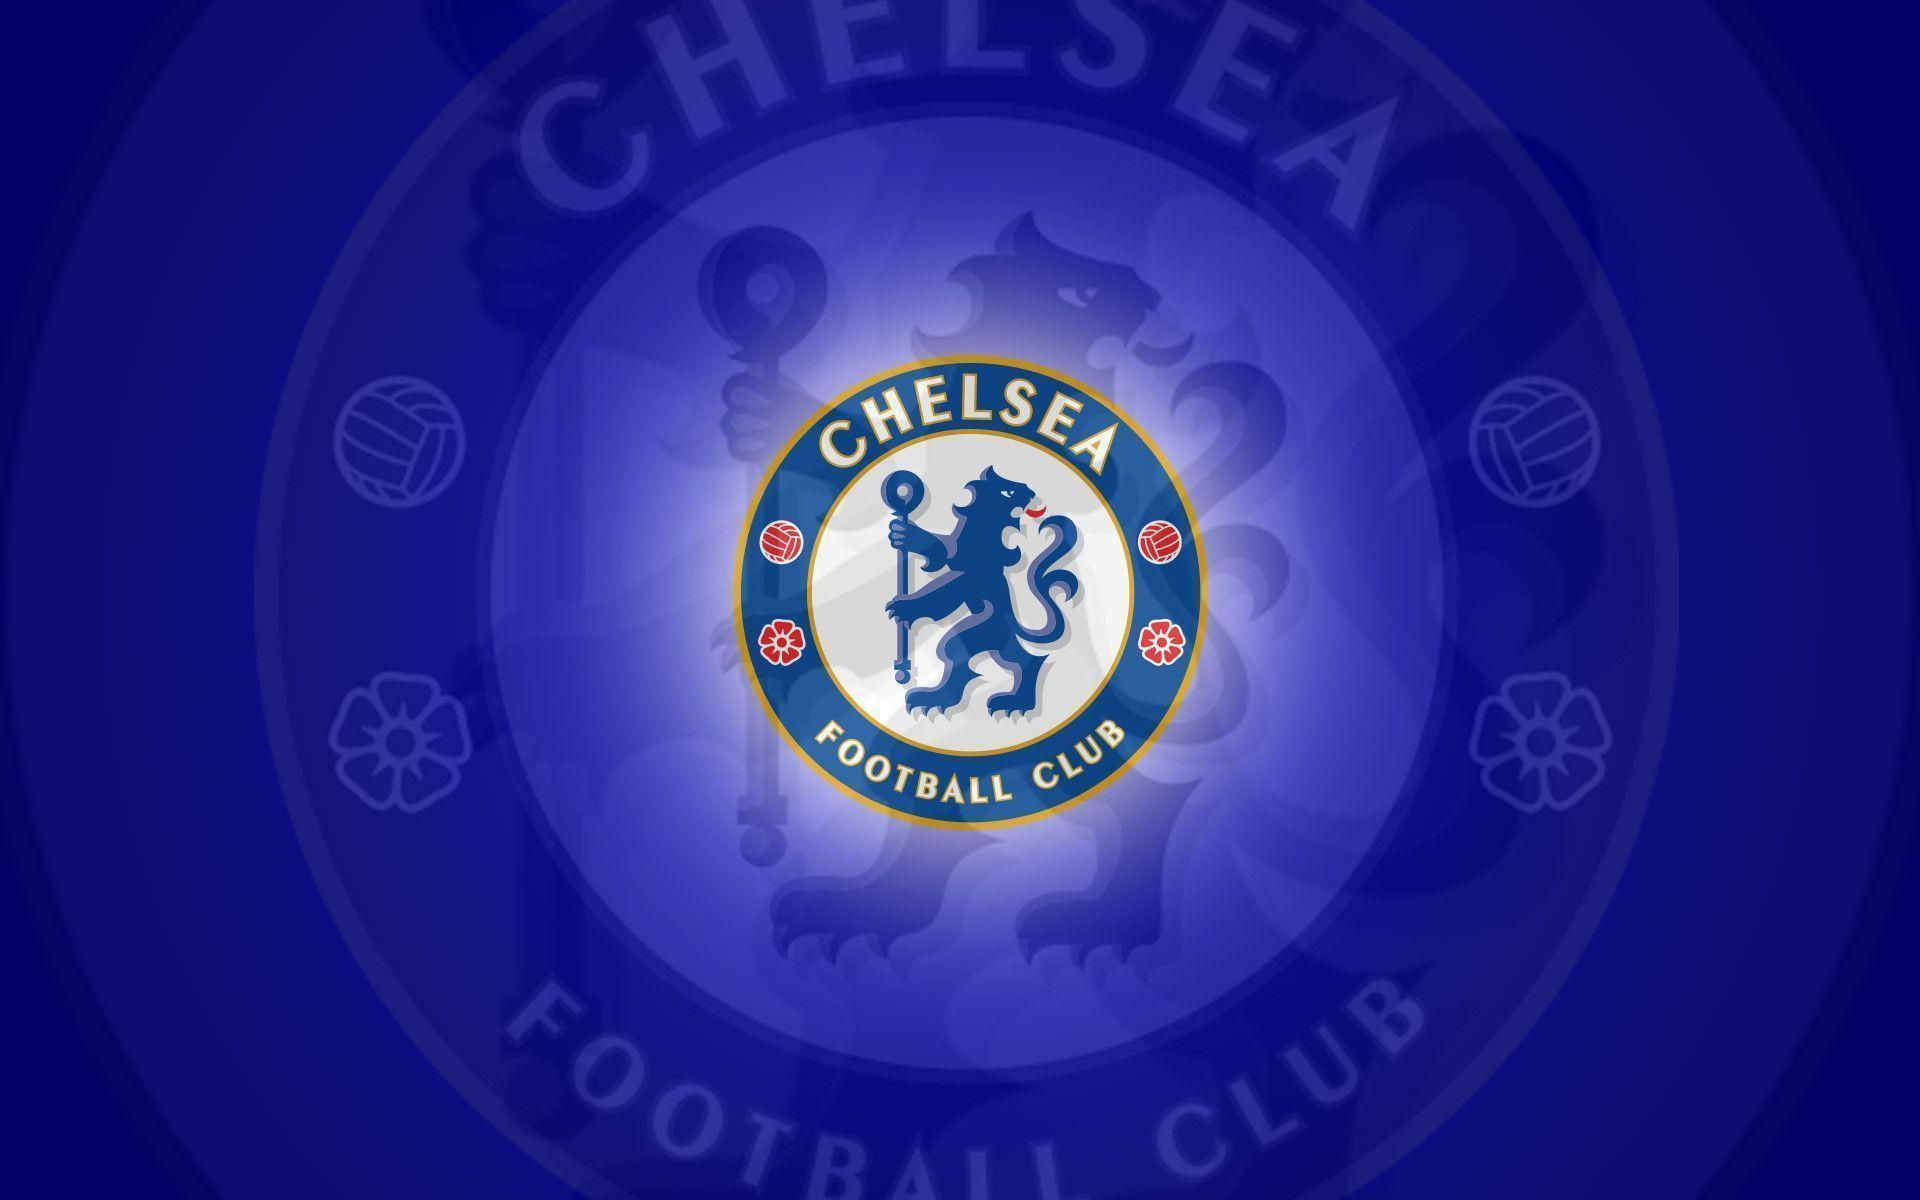 Chelsea Football Club Wallpapers